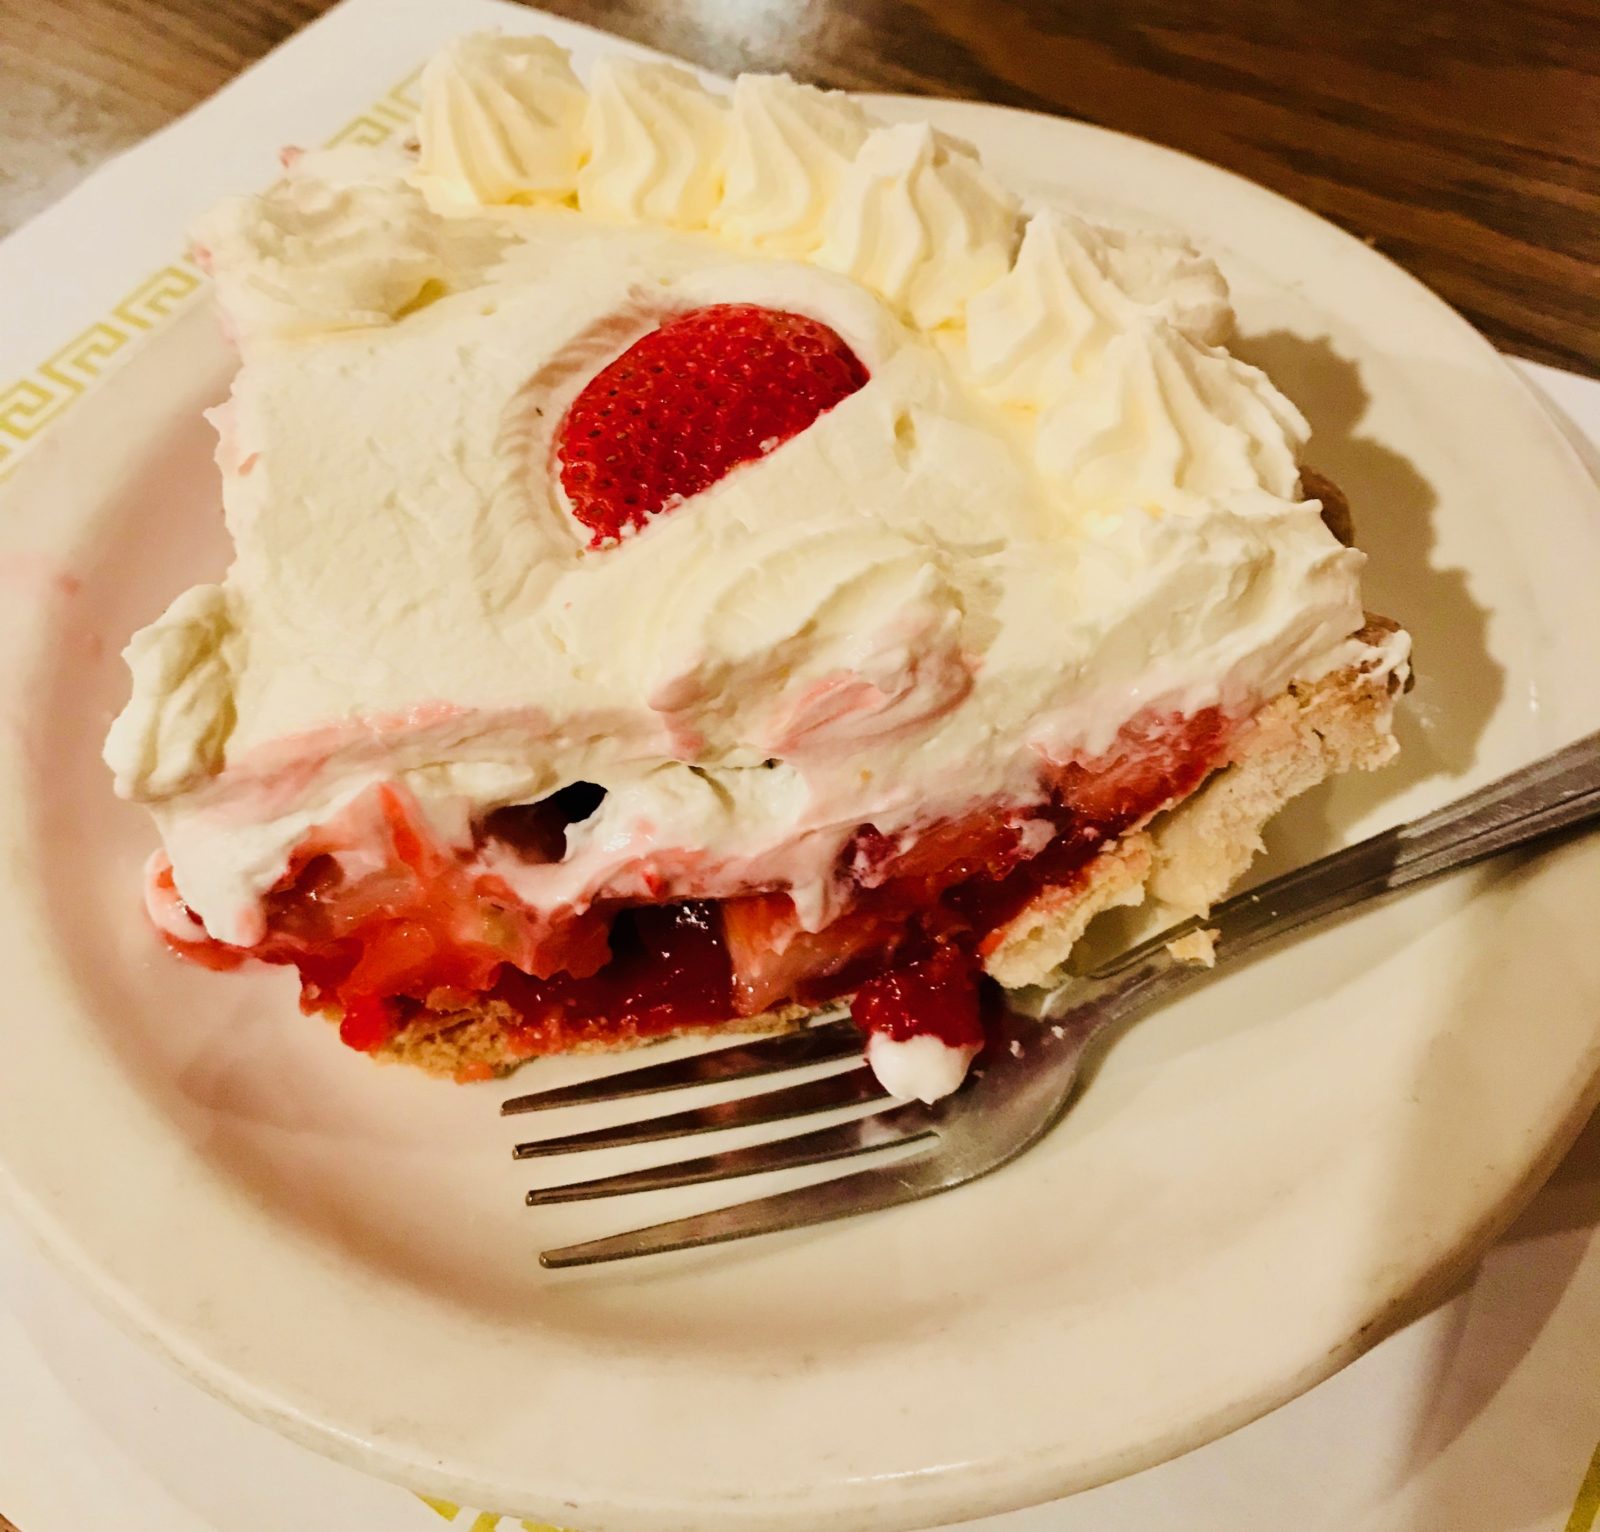 Pick of the Week - My Mother's Restaurant - Strawberry Cream Pie